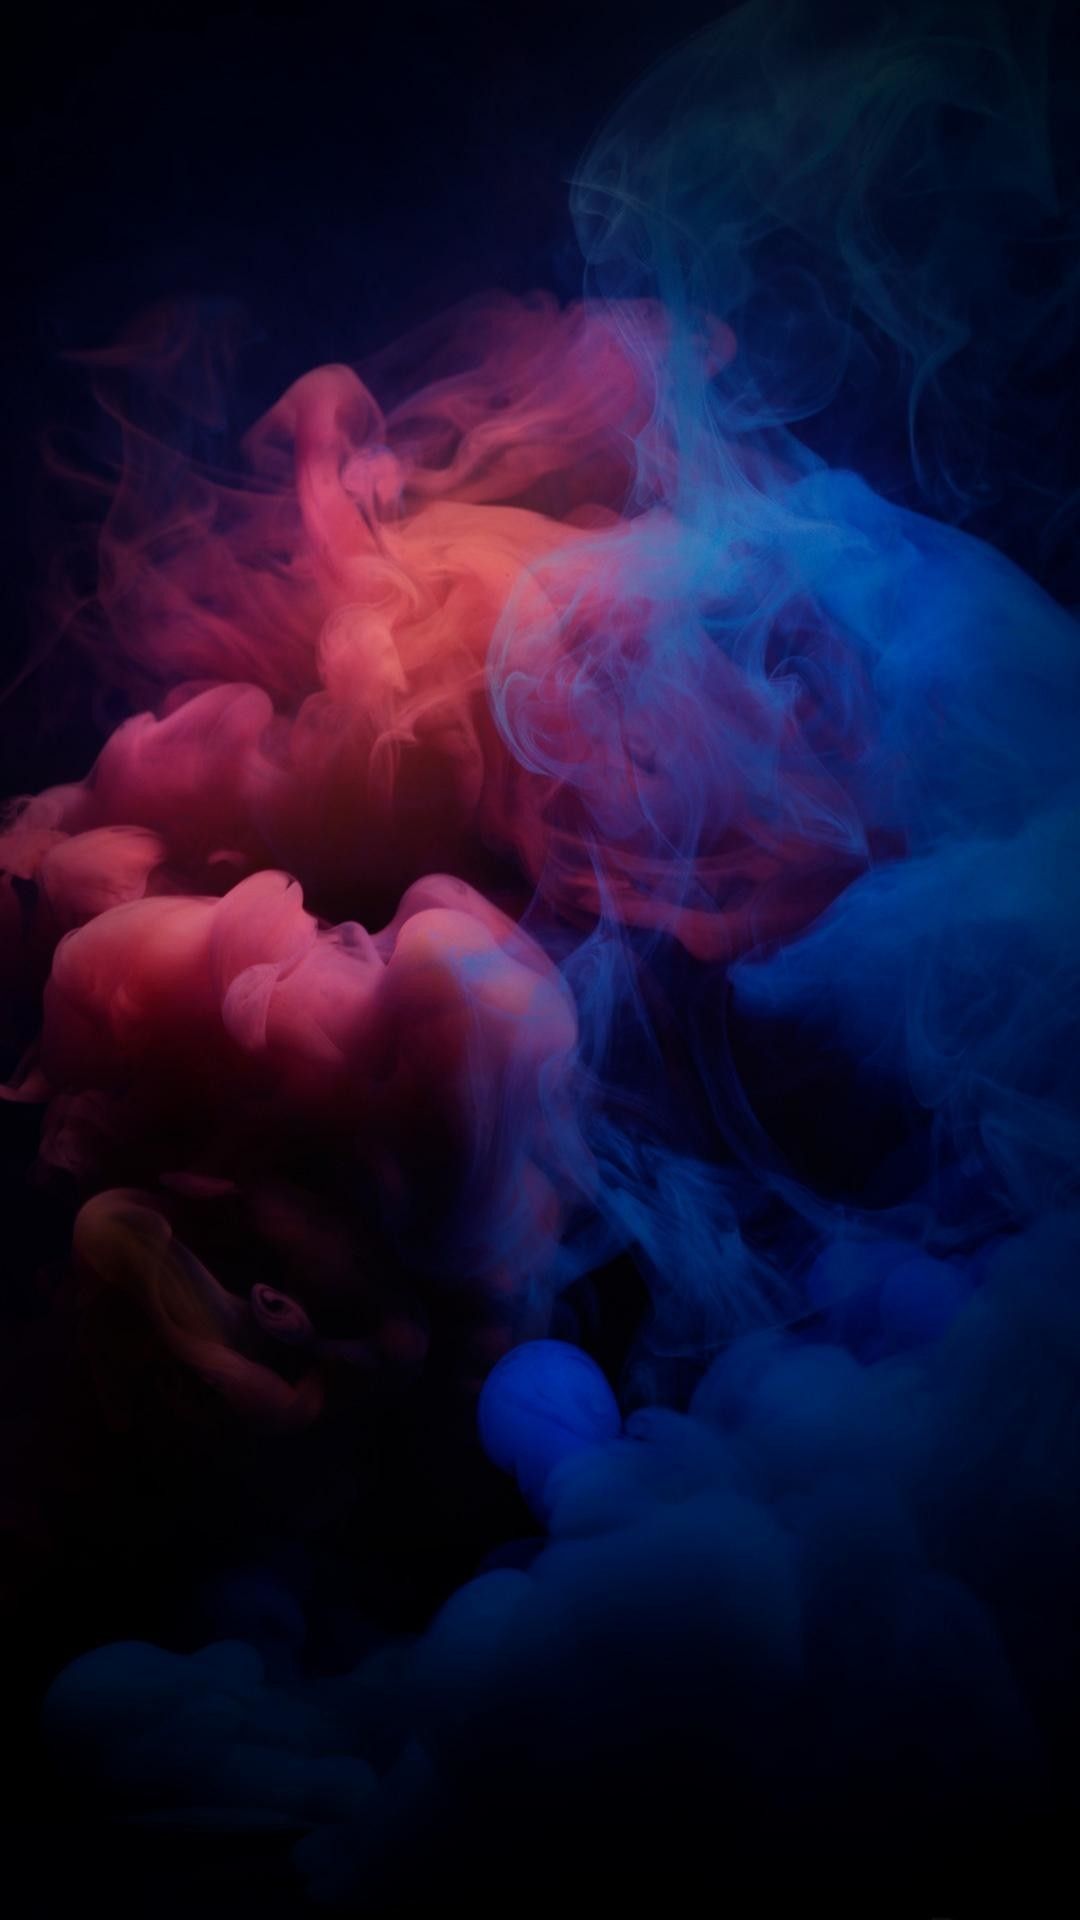 Download wallpaper 3840x2400 smoke, colored smoke, spiral, swirling 4k  ultra hd 16:10 hd background